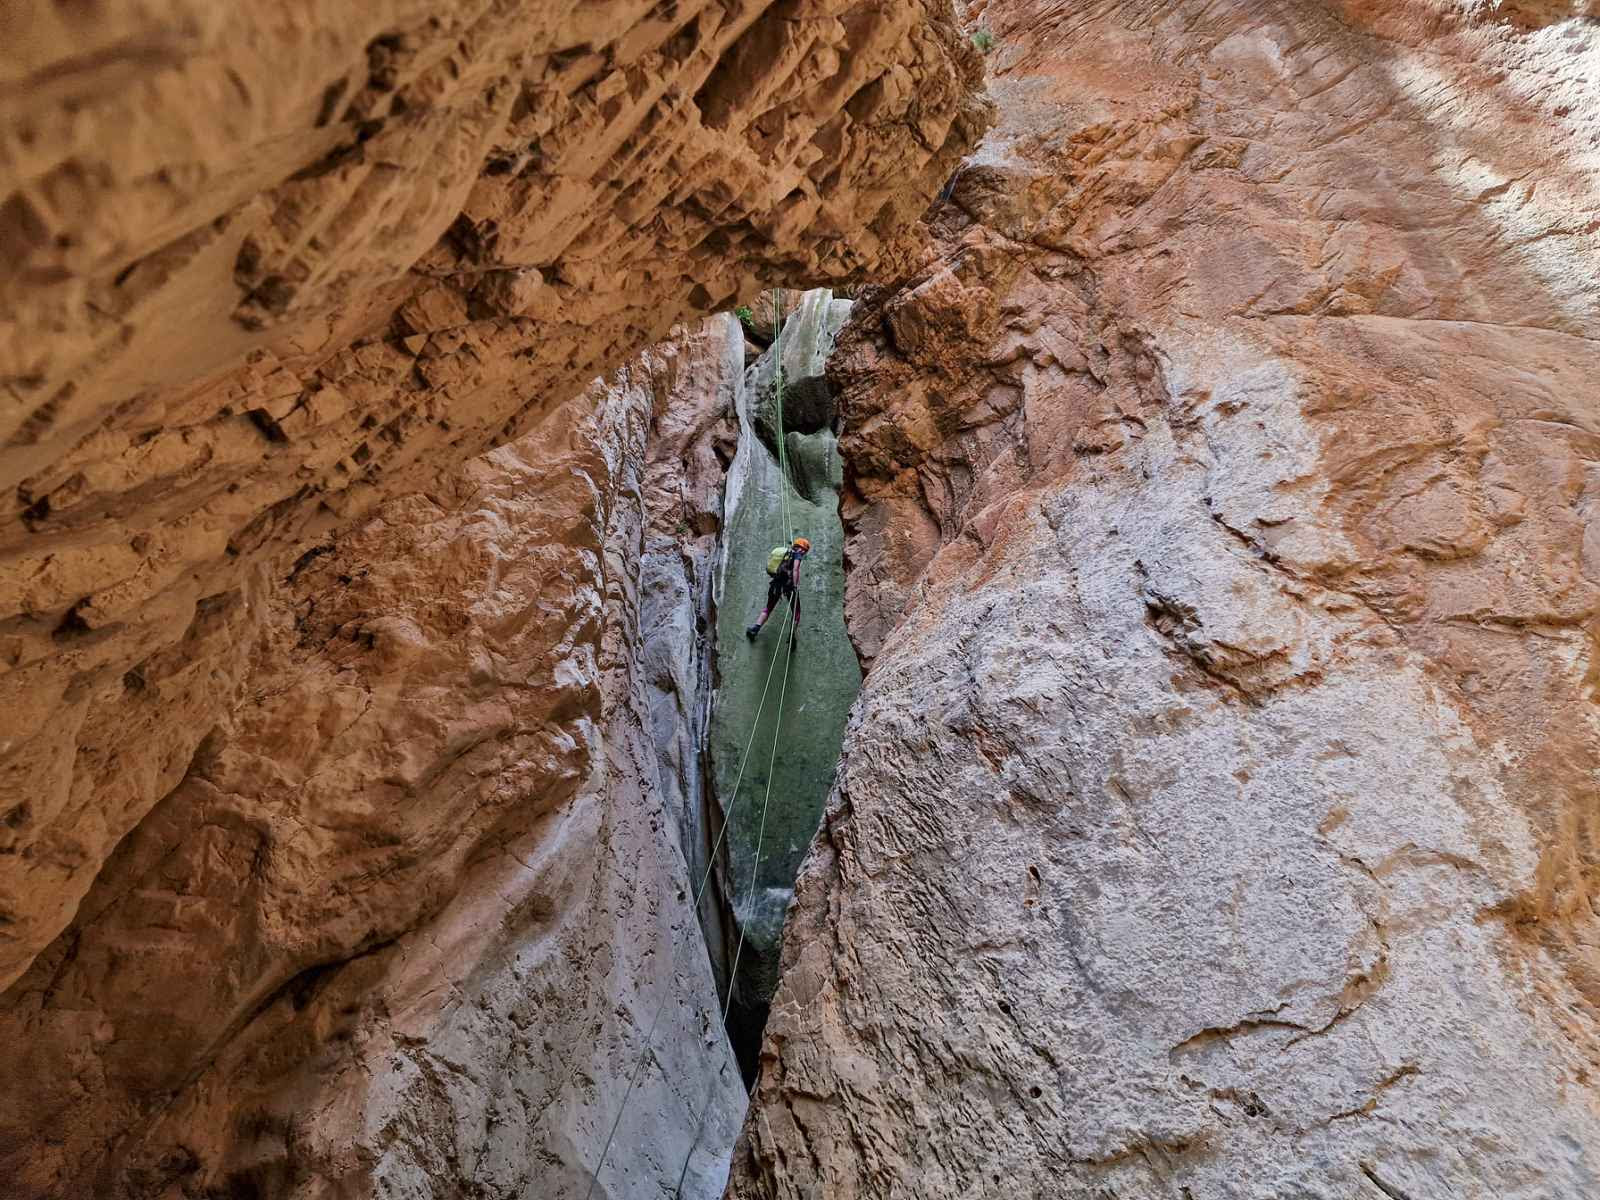 canyoning φαράγγια Αρμένοι Ρέθυμνο